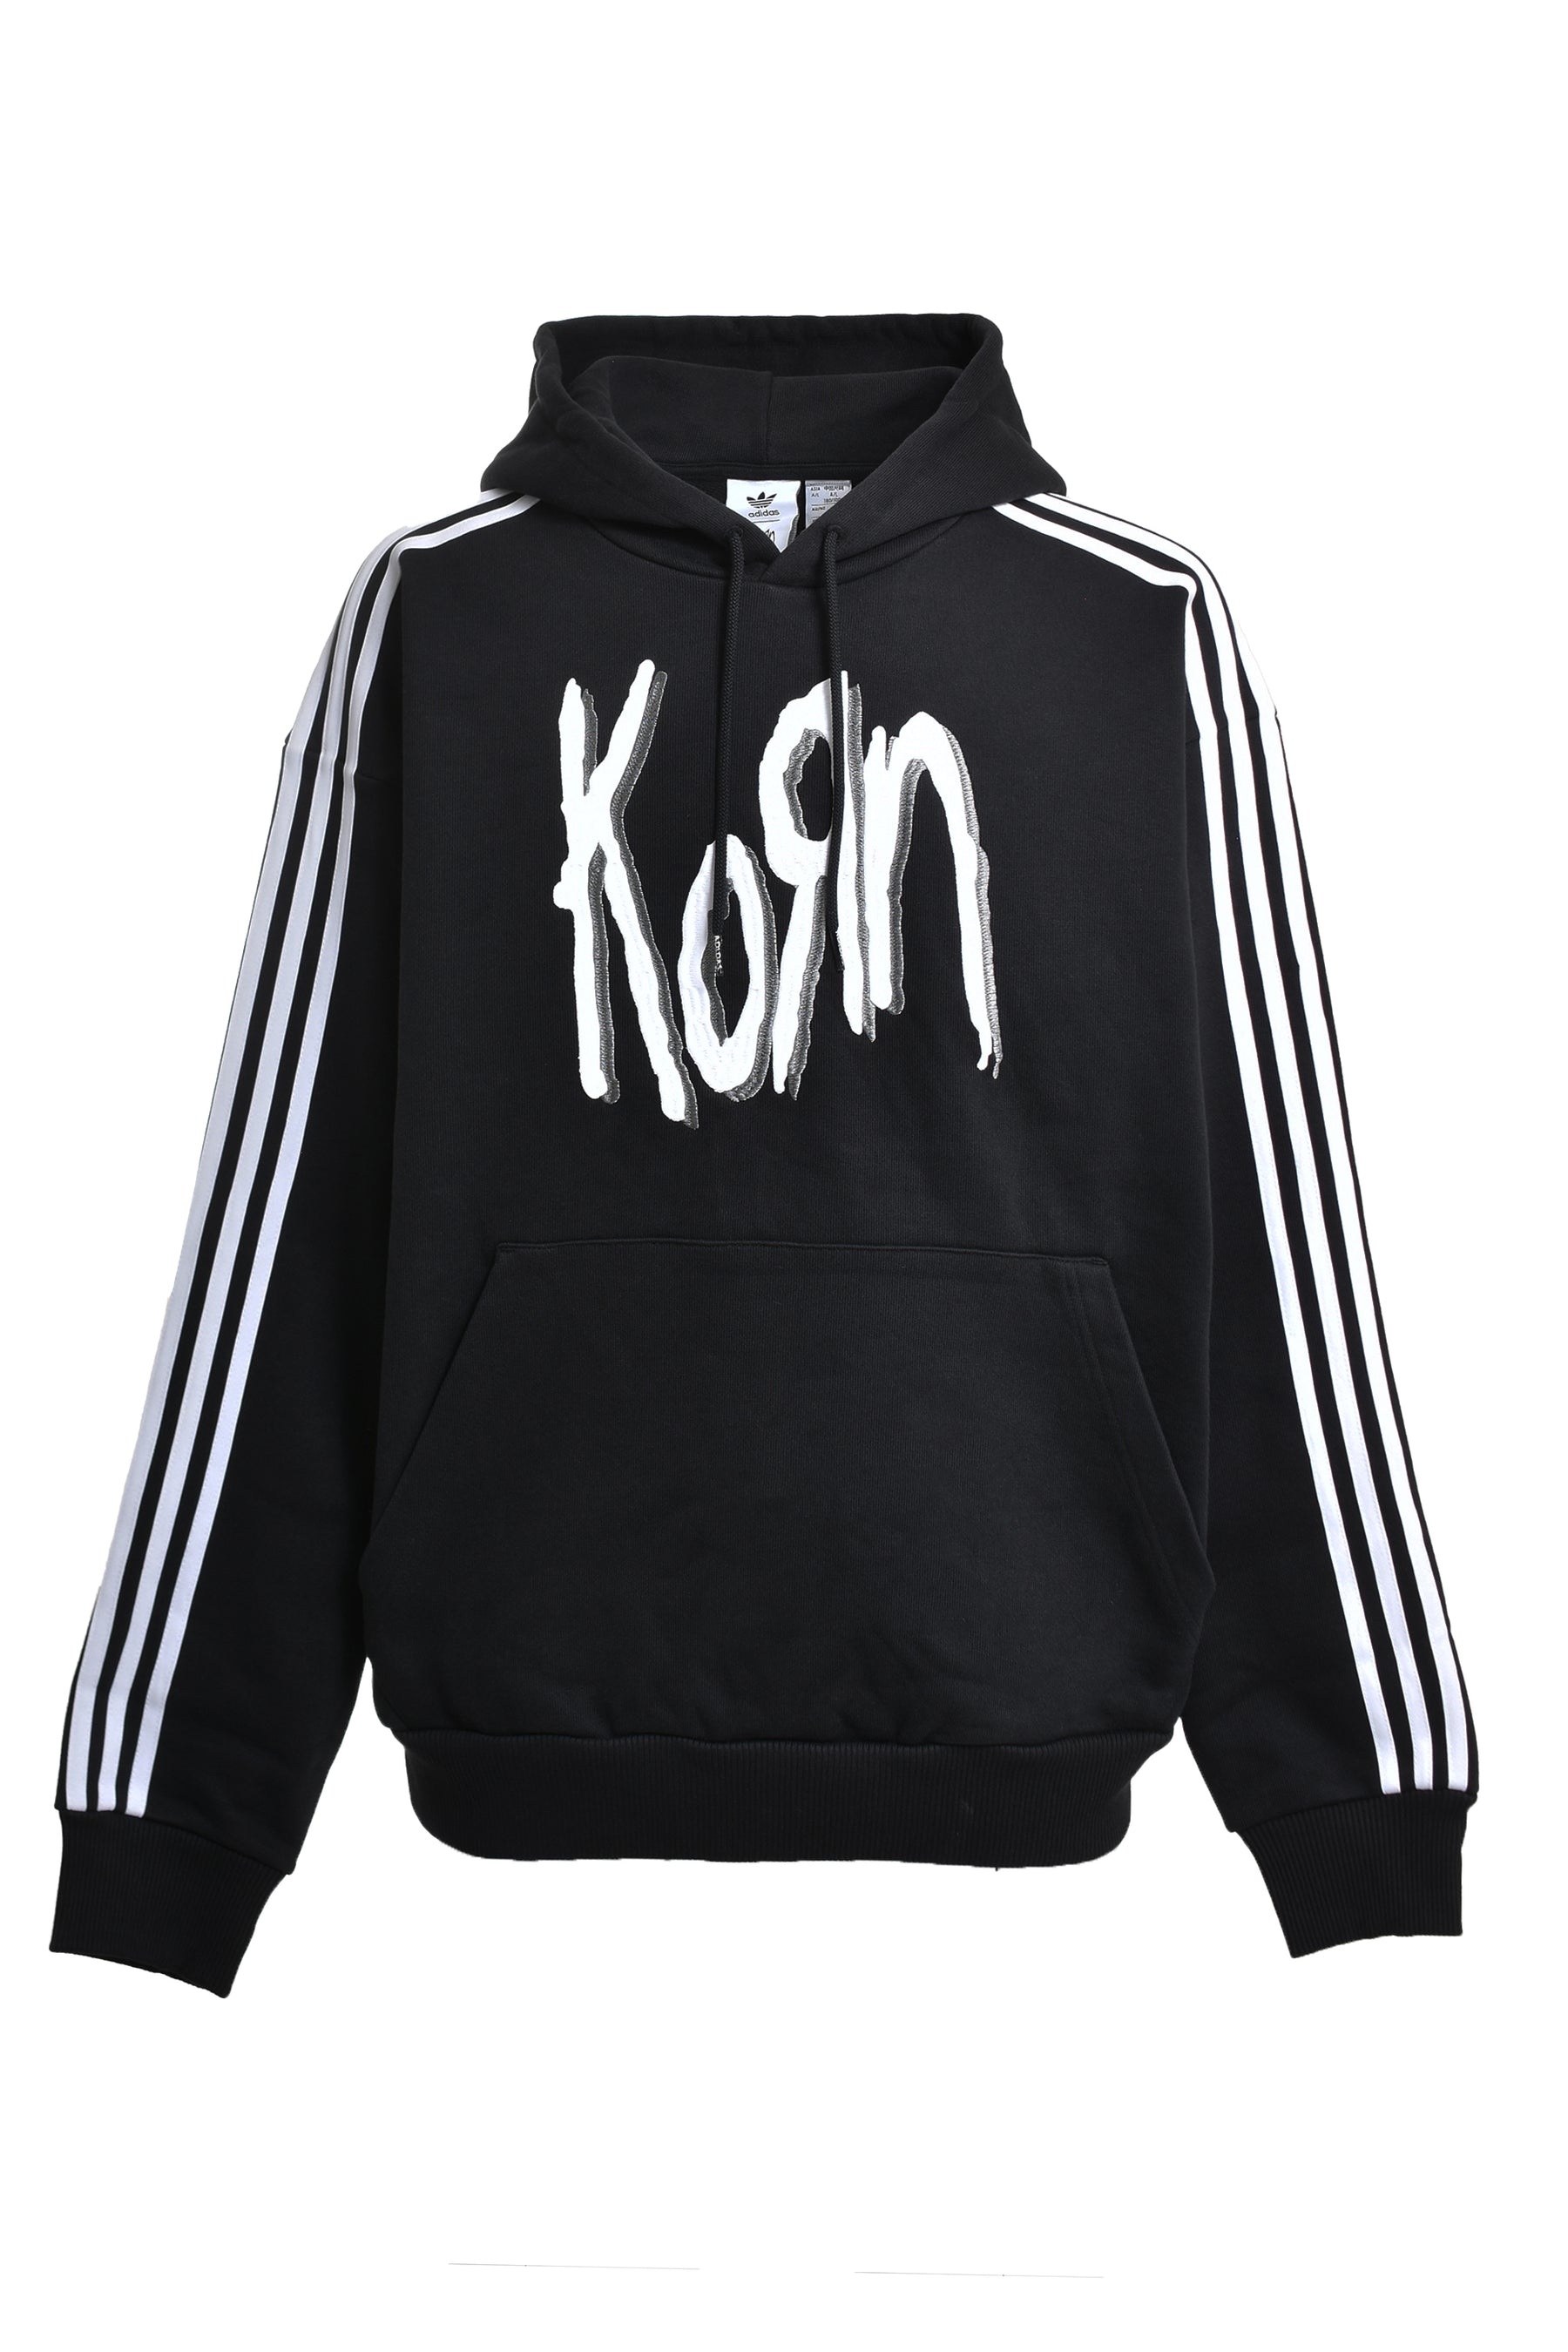 Korn adidas Originals